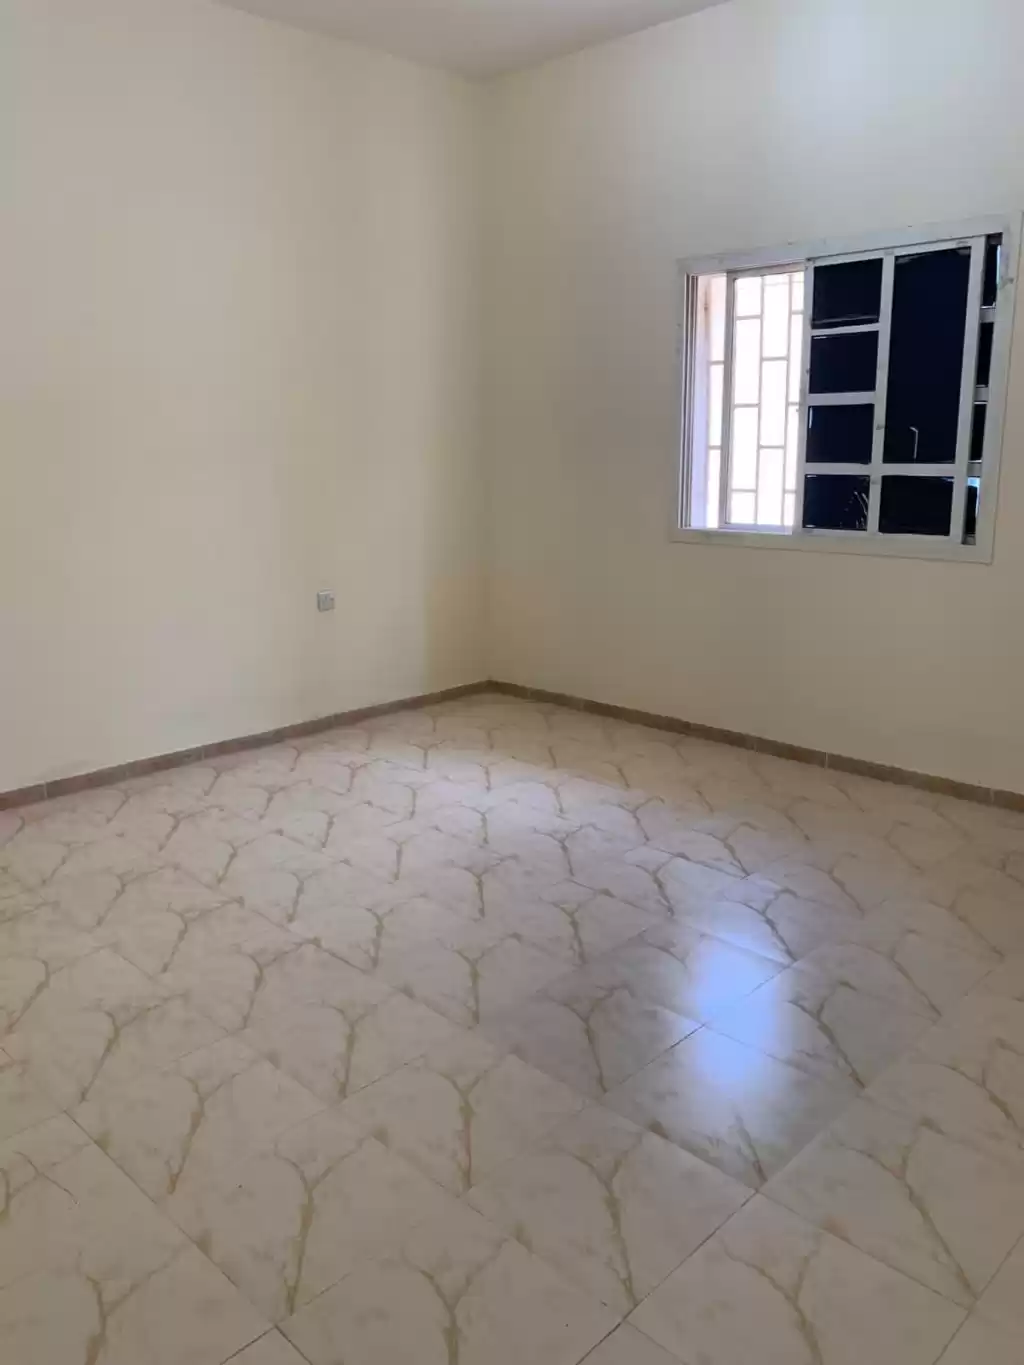 Résidentiel Propriété prête Studio U / f Appartement  a louer au Al-Sadd , Doha #13405 - 1  image 